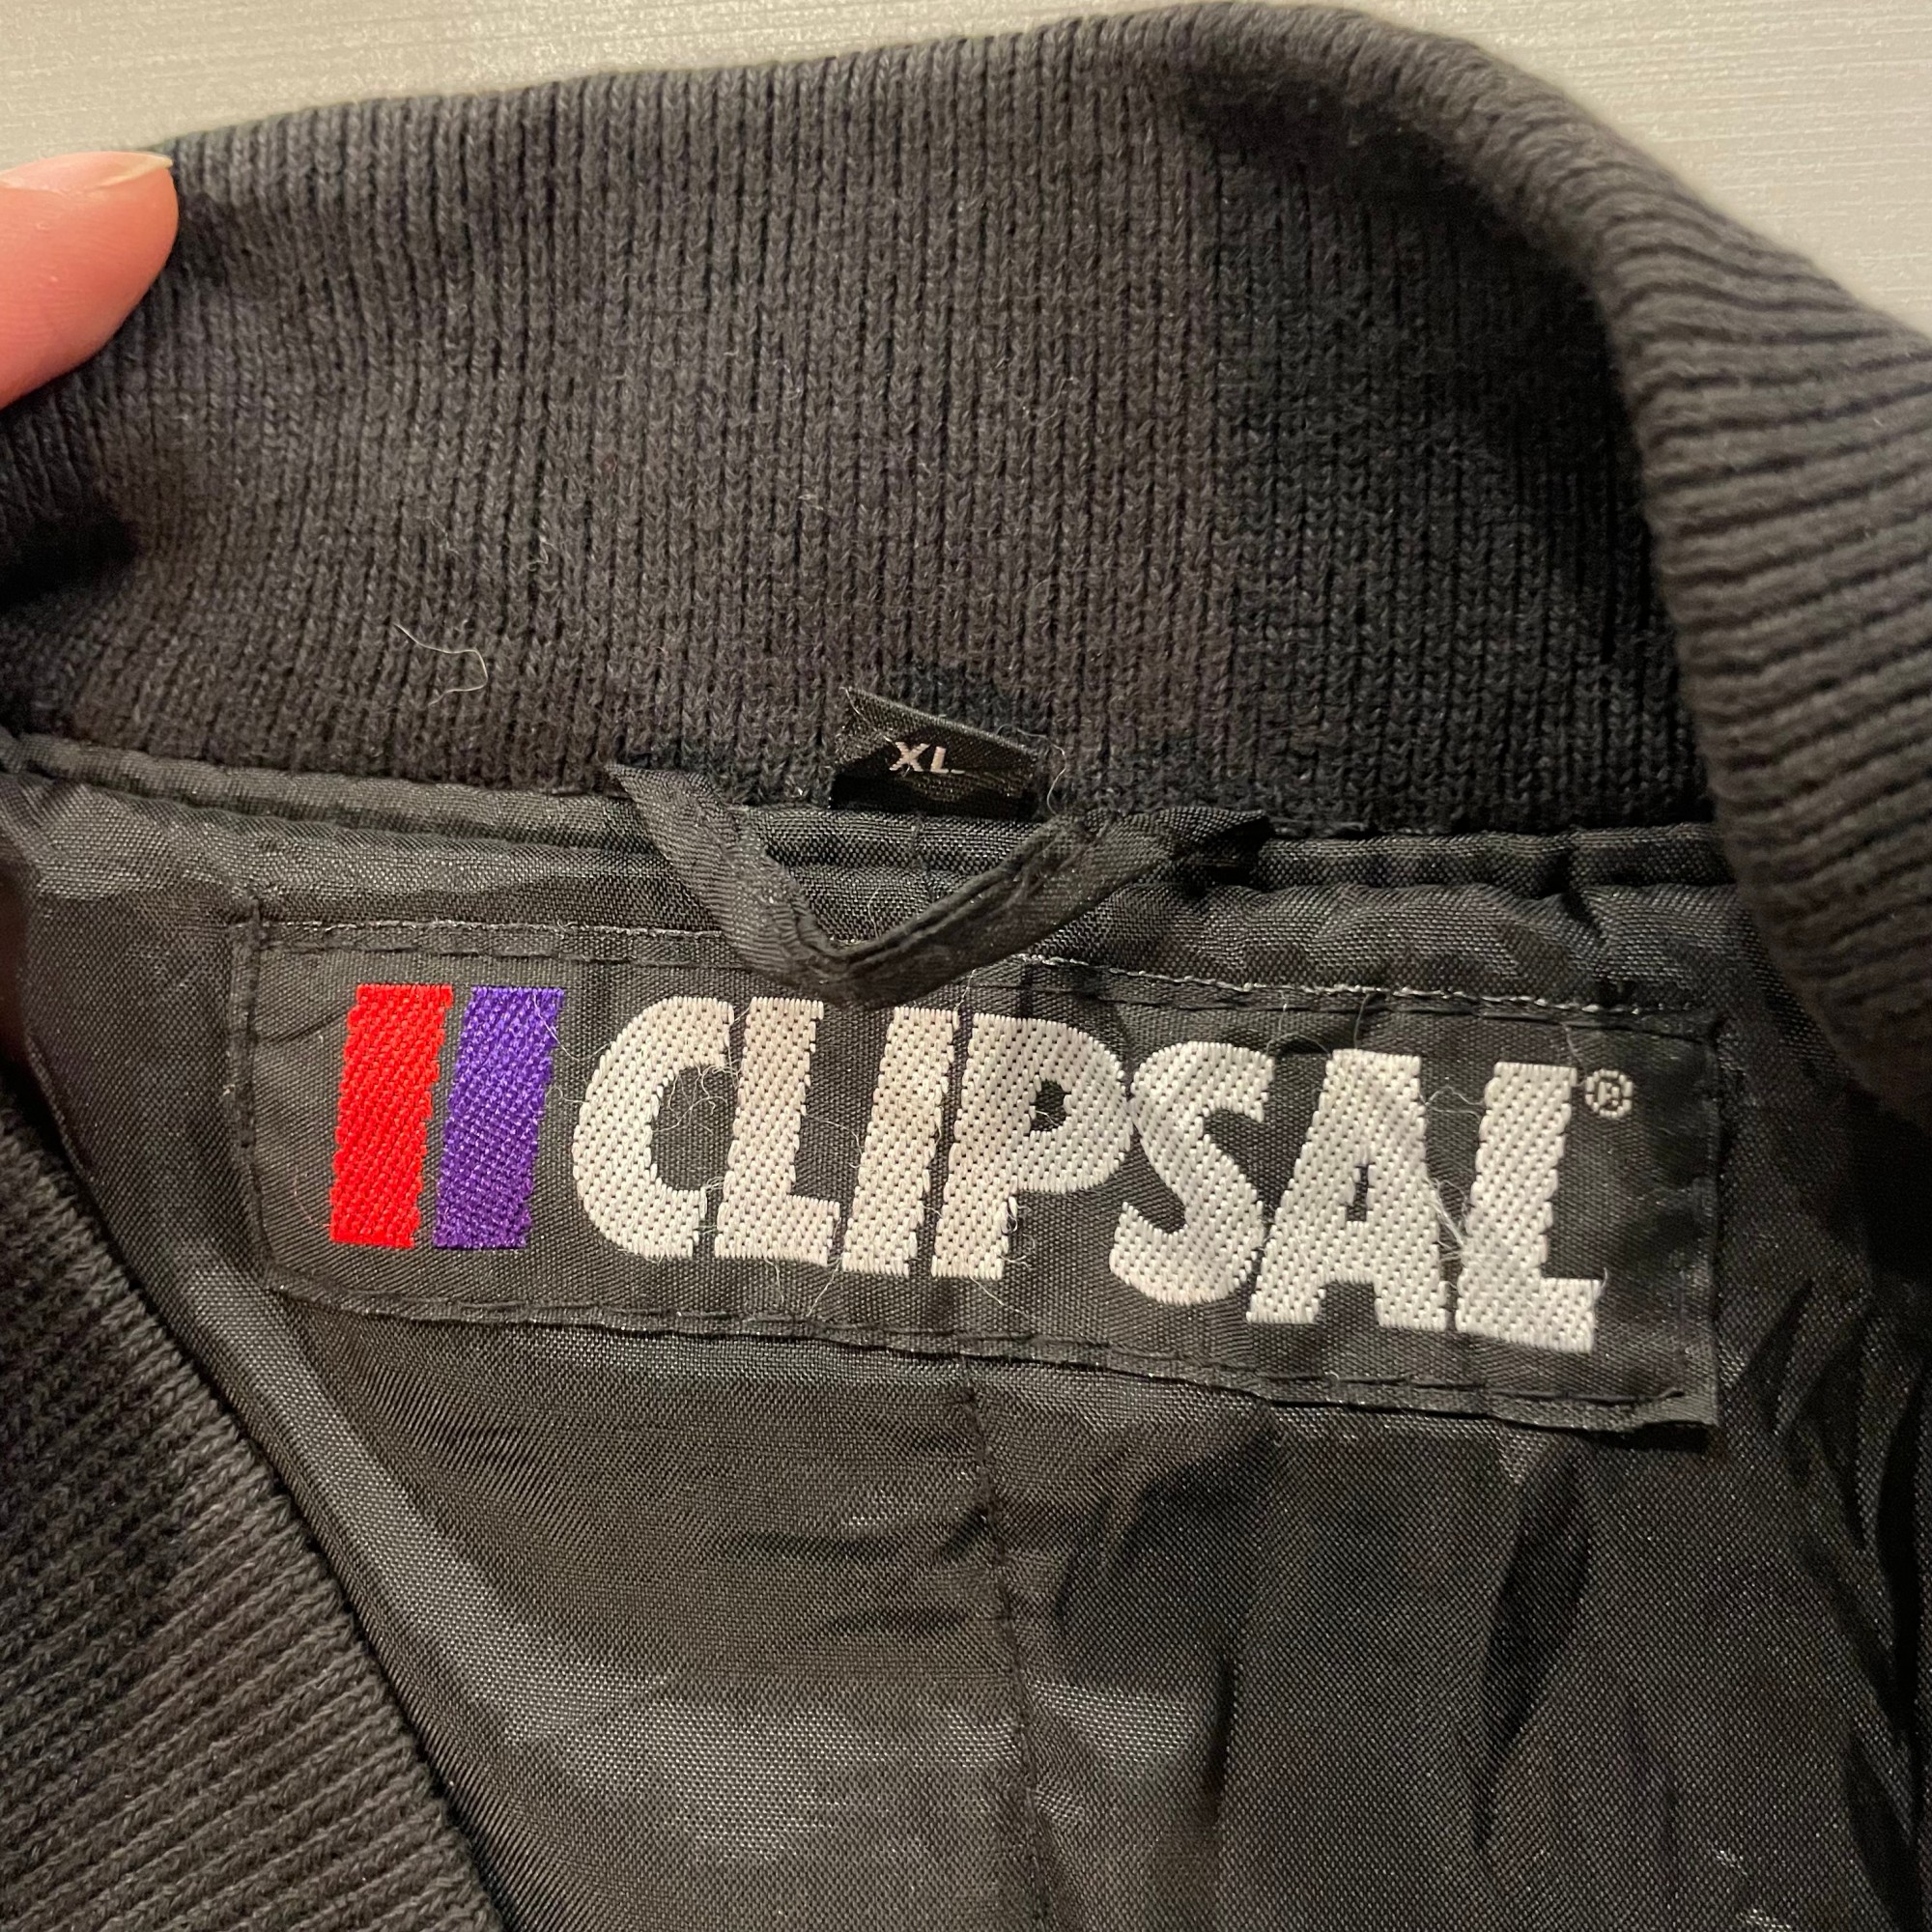 CLIPSAL studium jacket スタジアムジャケット　XL 古着